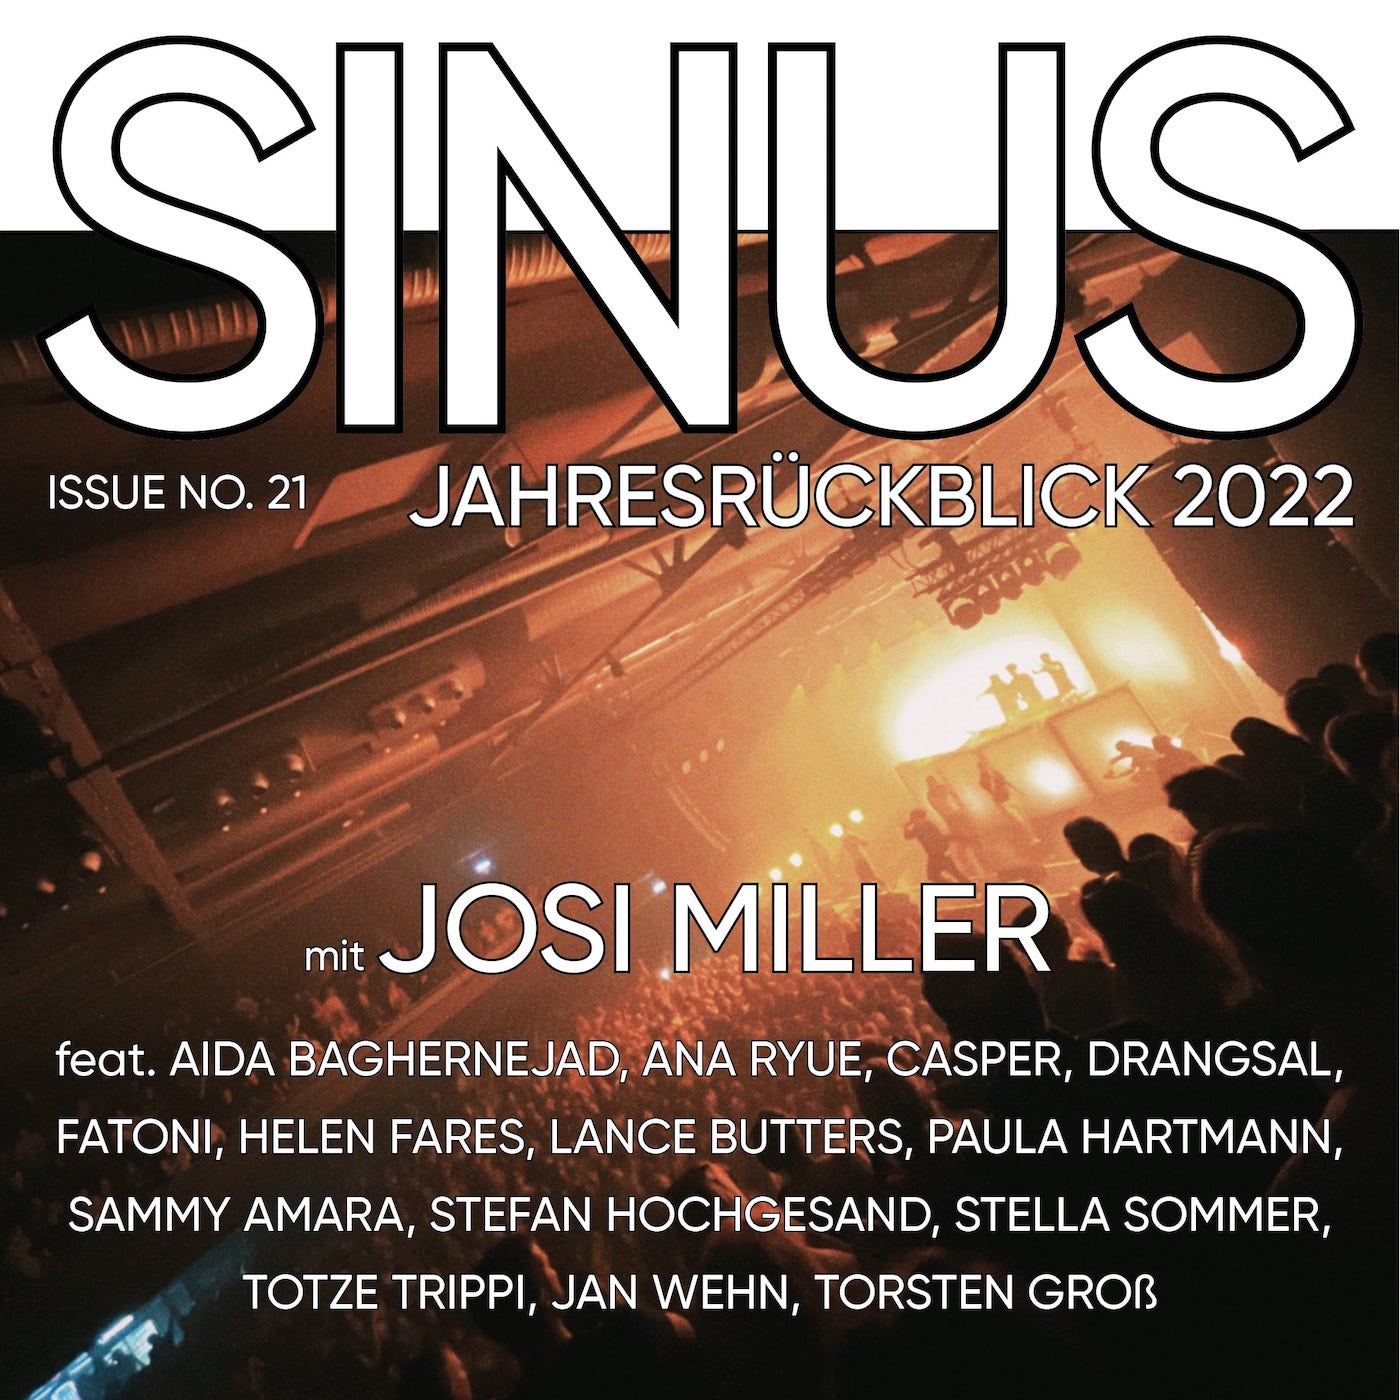 #21 Jahresrückblick 2022 mit Josi Miller feat. Casper, Sammy Amara, Helen Fares, Fatoni u.v.m.